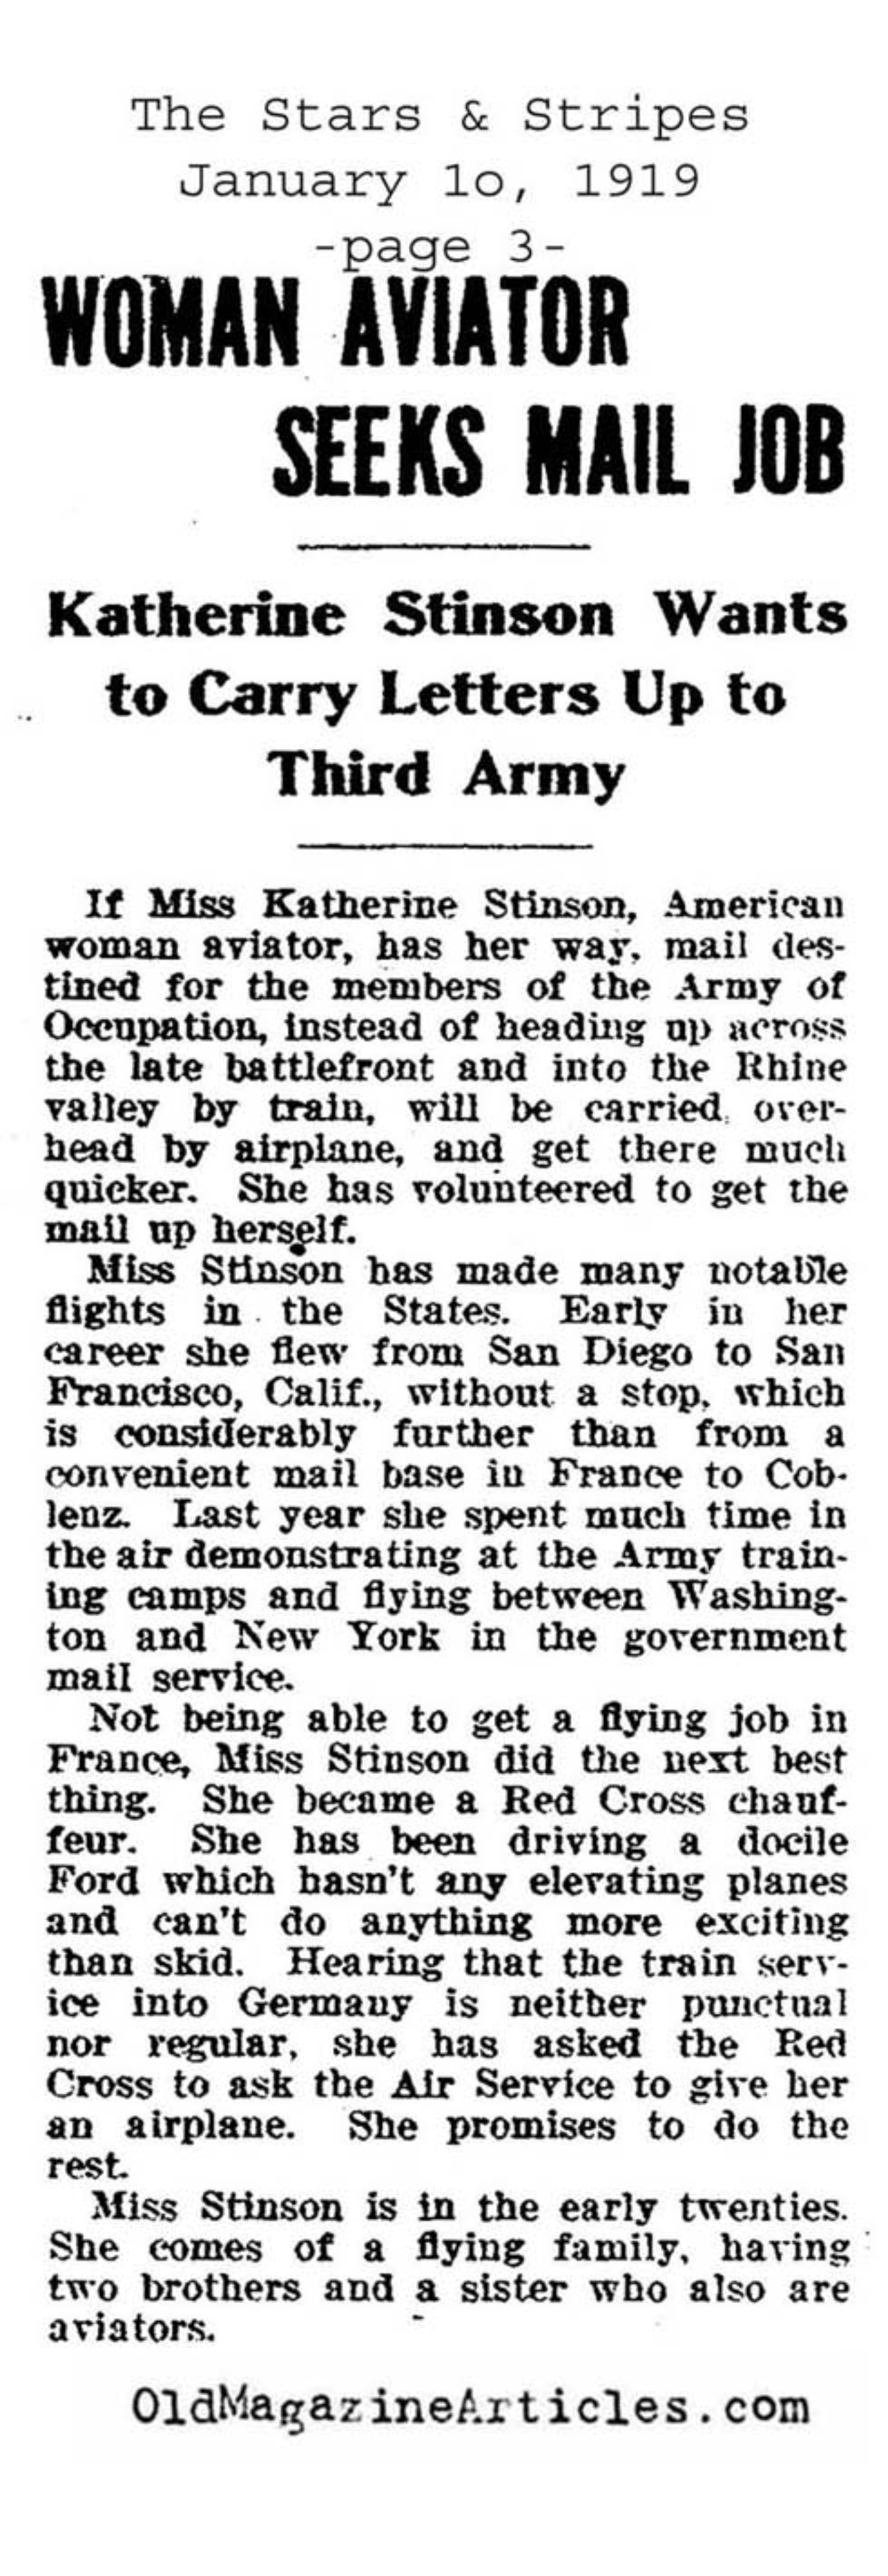 Woman Aviator Seeks Mail Job (The Stars and Stripes, 1919)